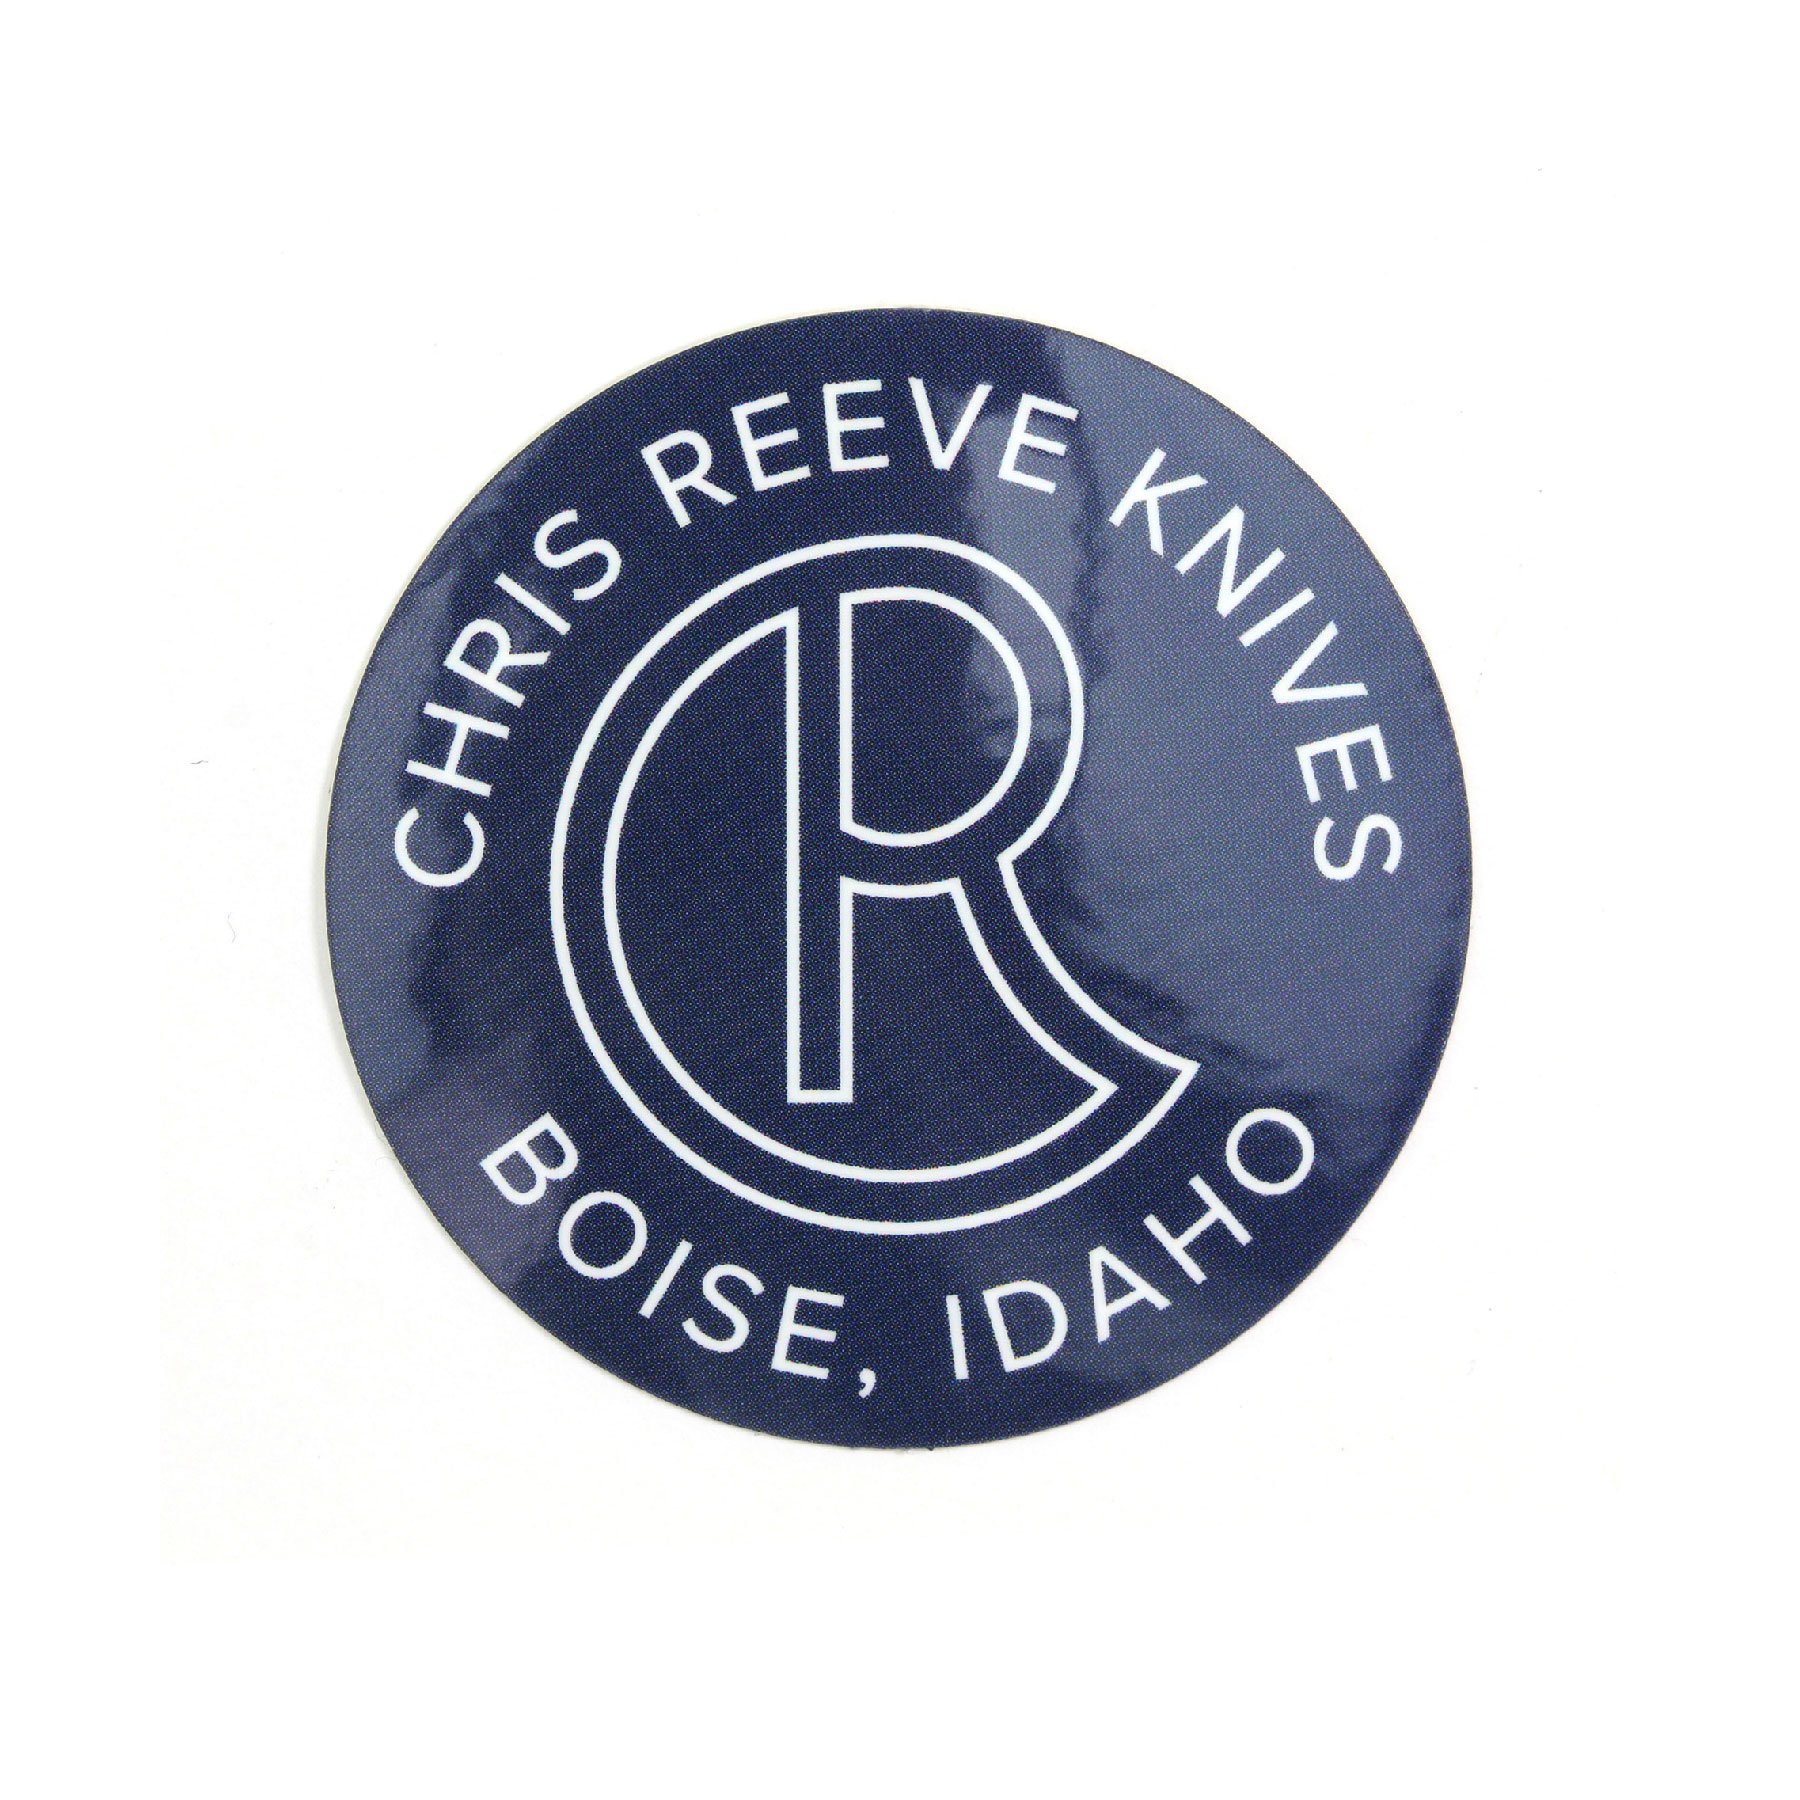 Chris Reeve Sticker Pack